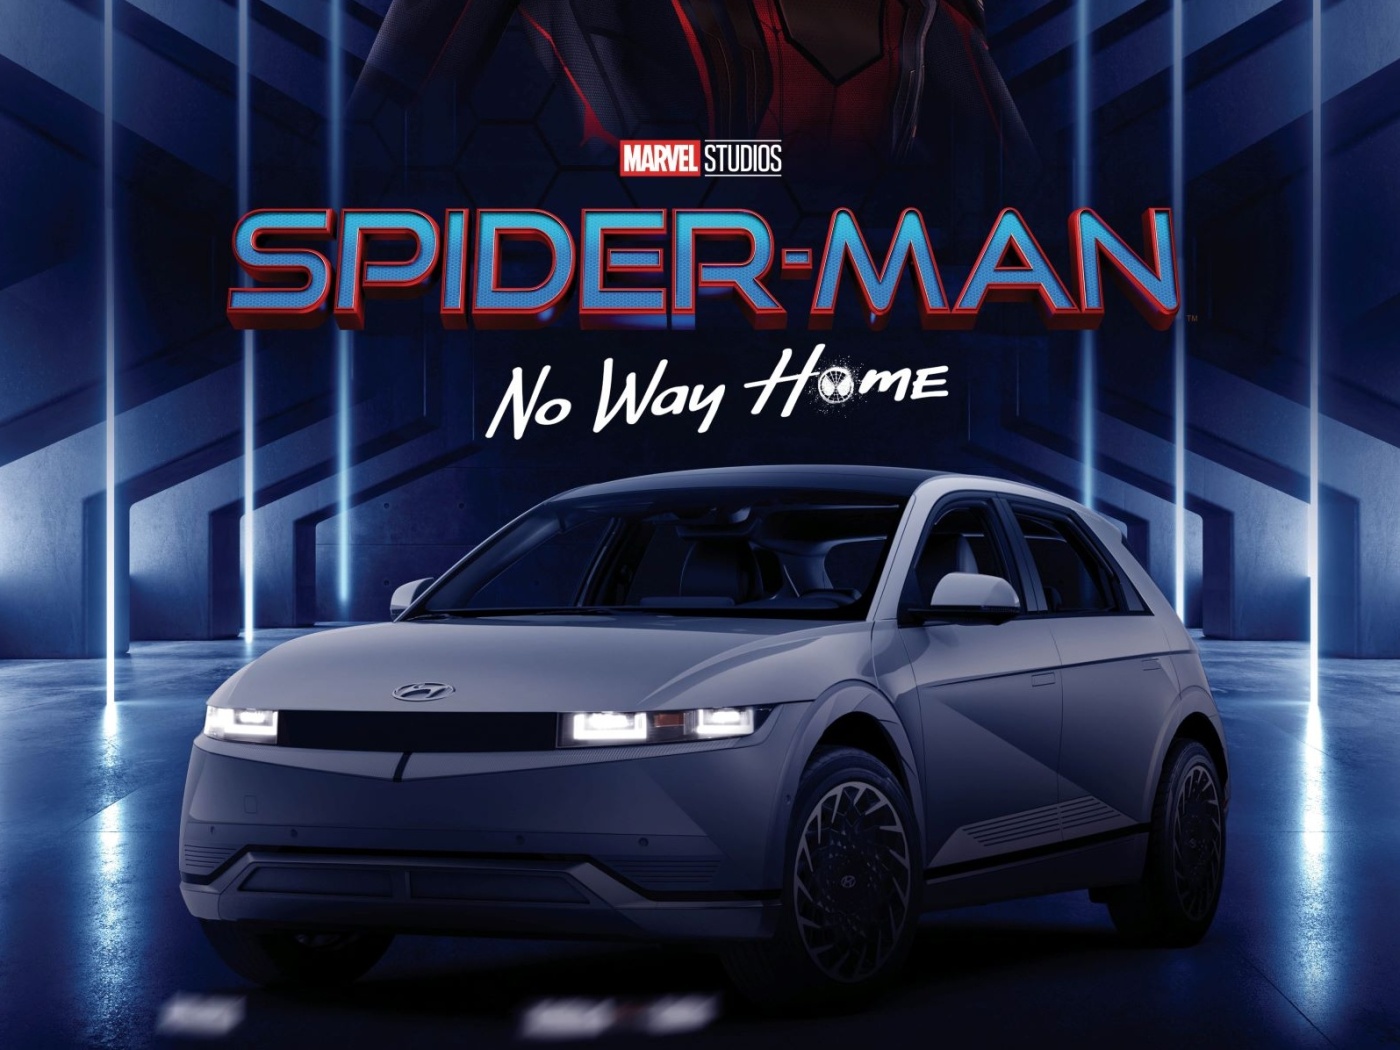 Spider-Man si v novém filmu stopne elektromobil, uhádnete jaký?